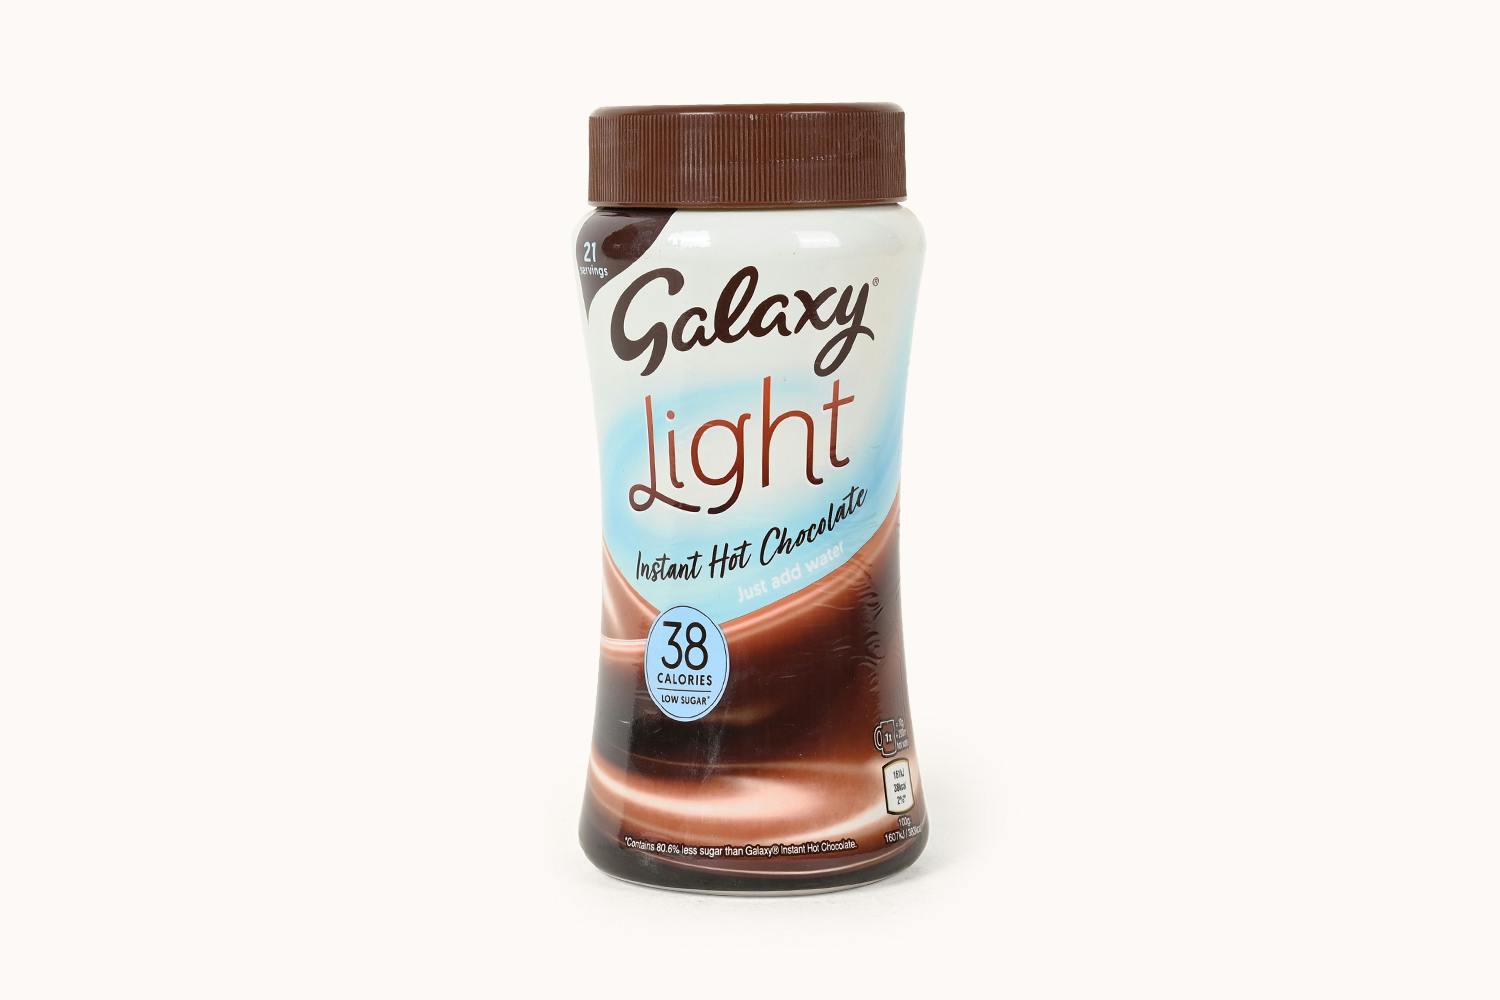 Galaxy Light Instant Hot Chocolate